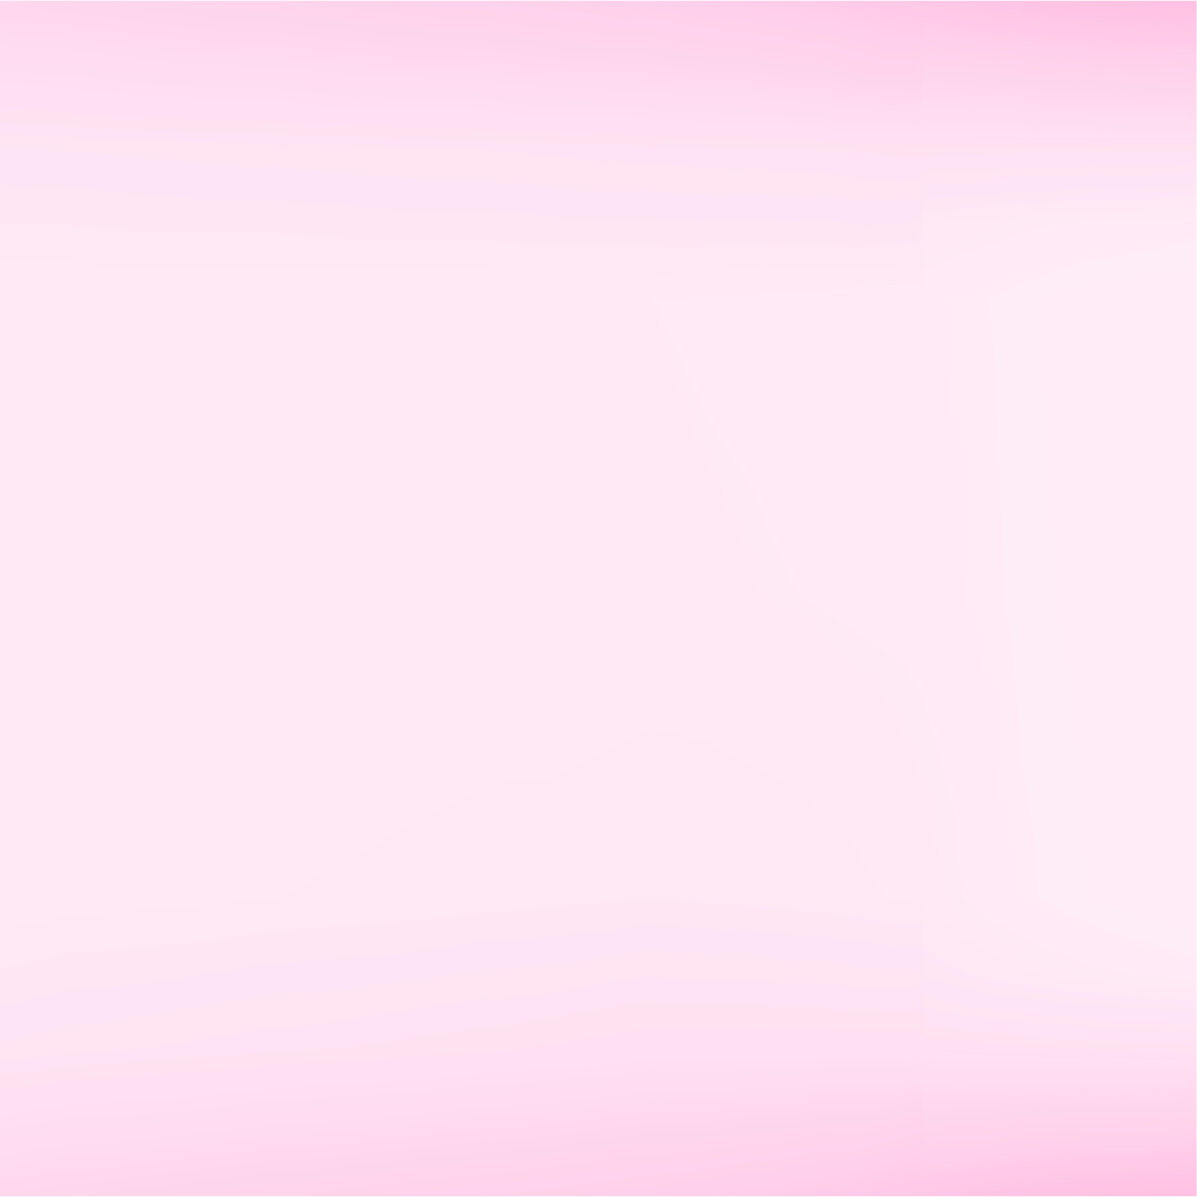 HD Pink Background Images: Free Download | Fotor